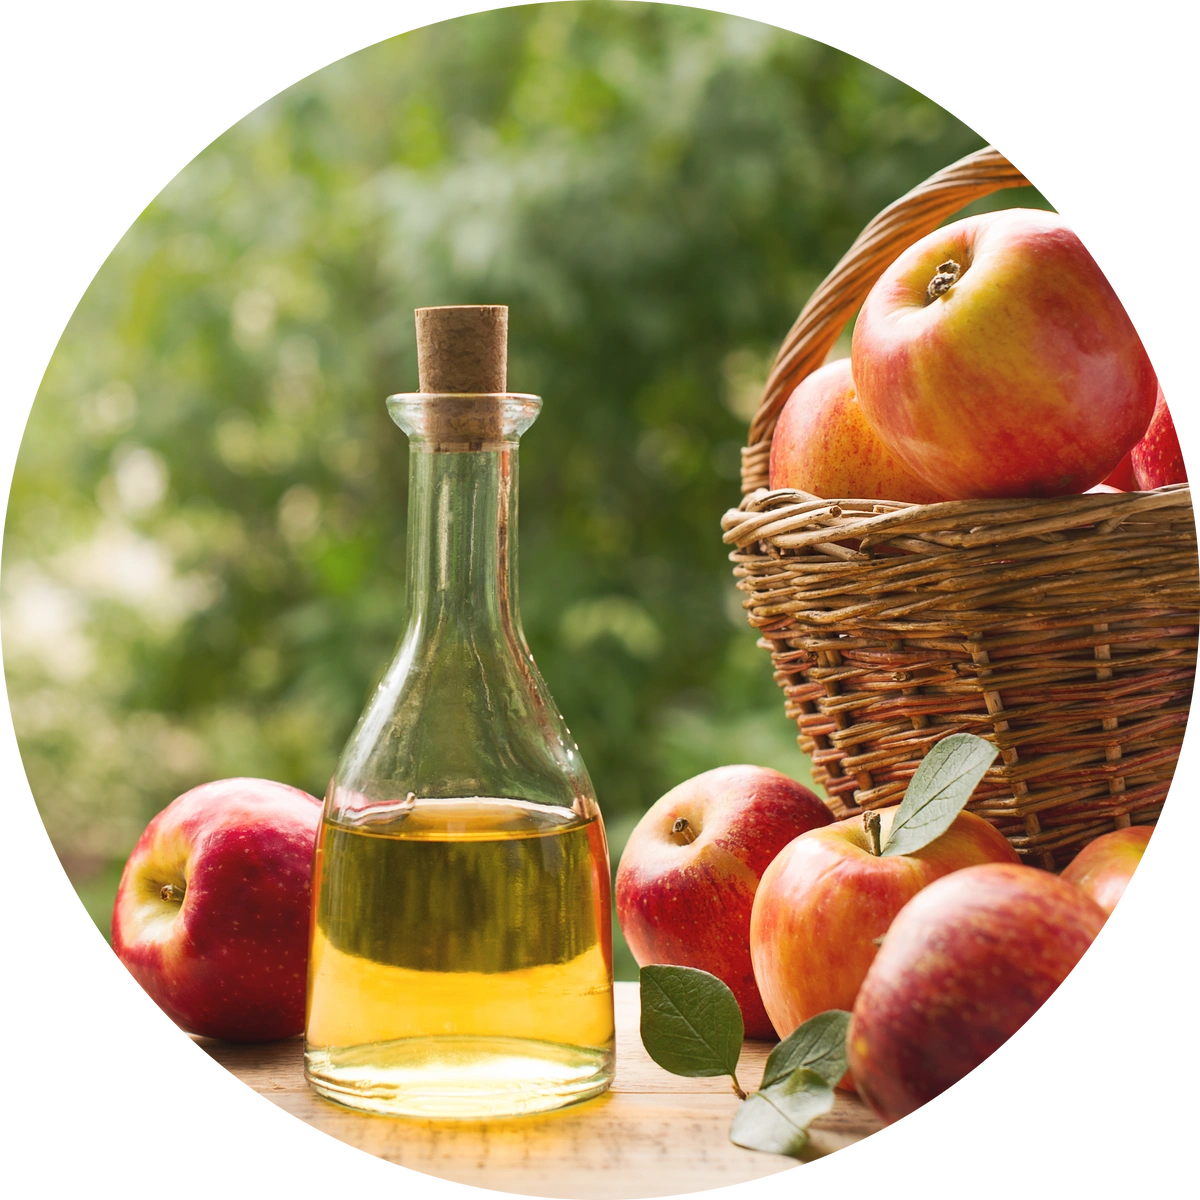 Can Apple Cider Vinegar Help with Erectile Dysfunction?